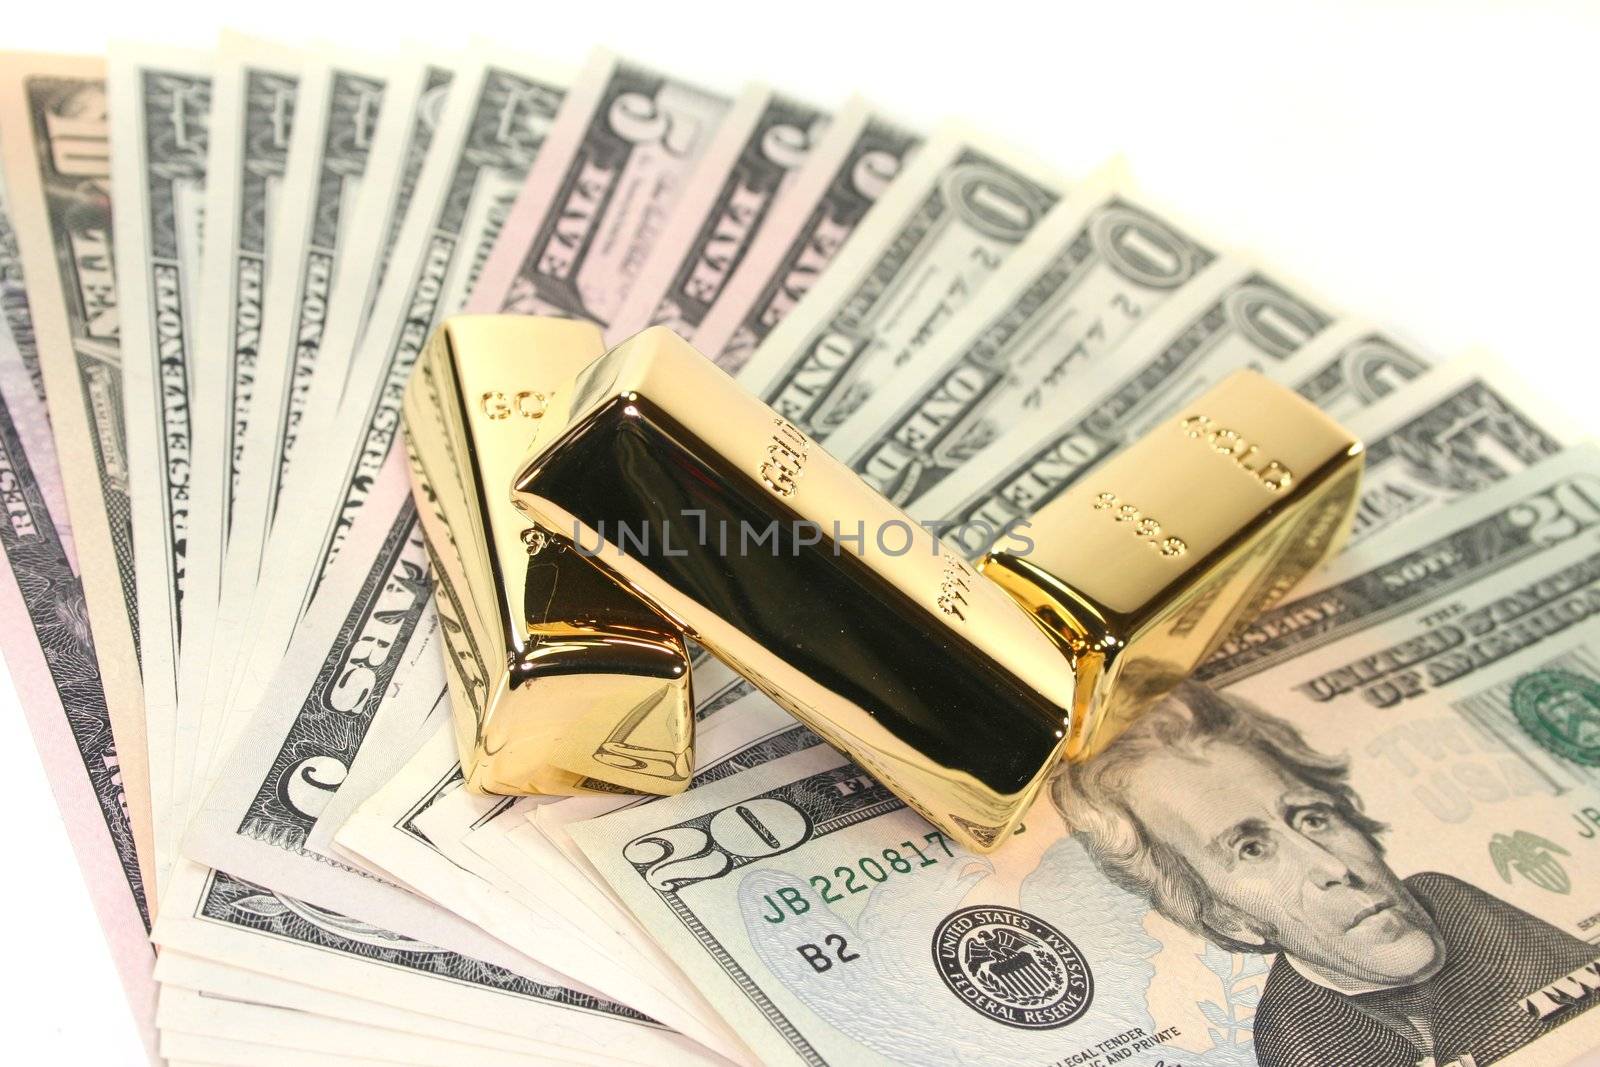 three large gold bars on many dollar bills